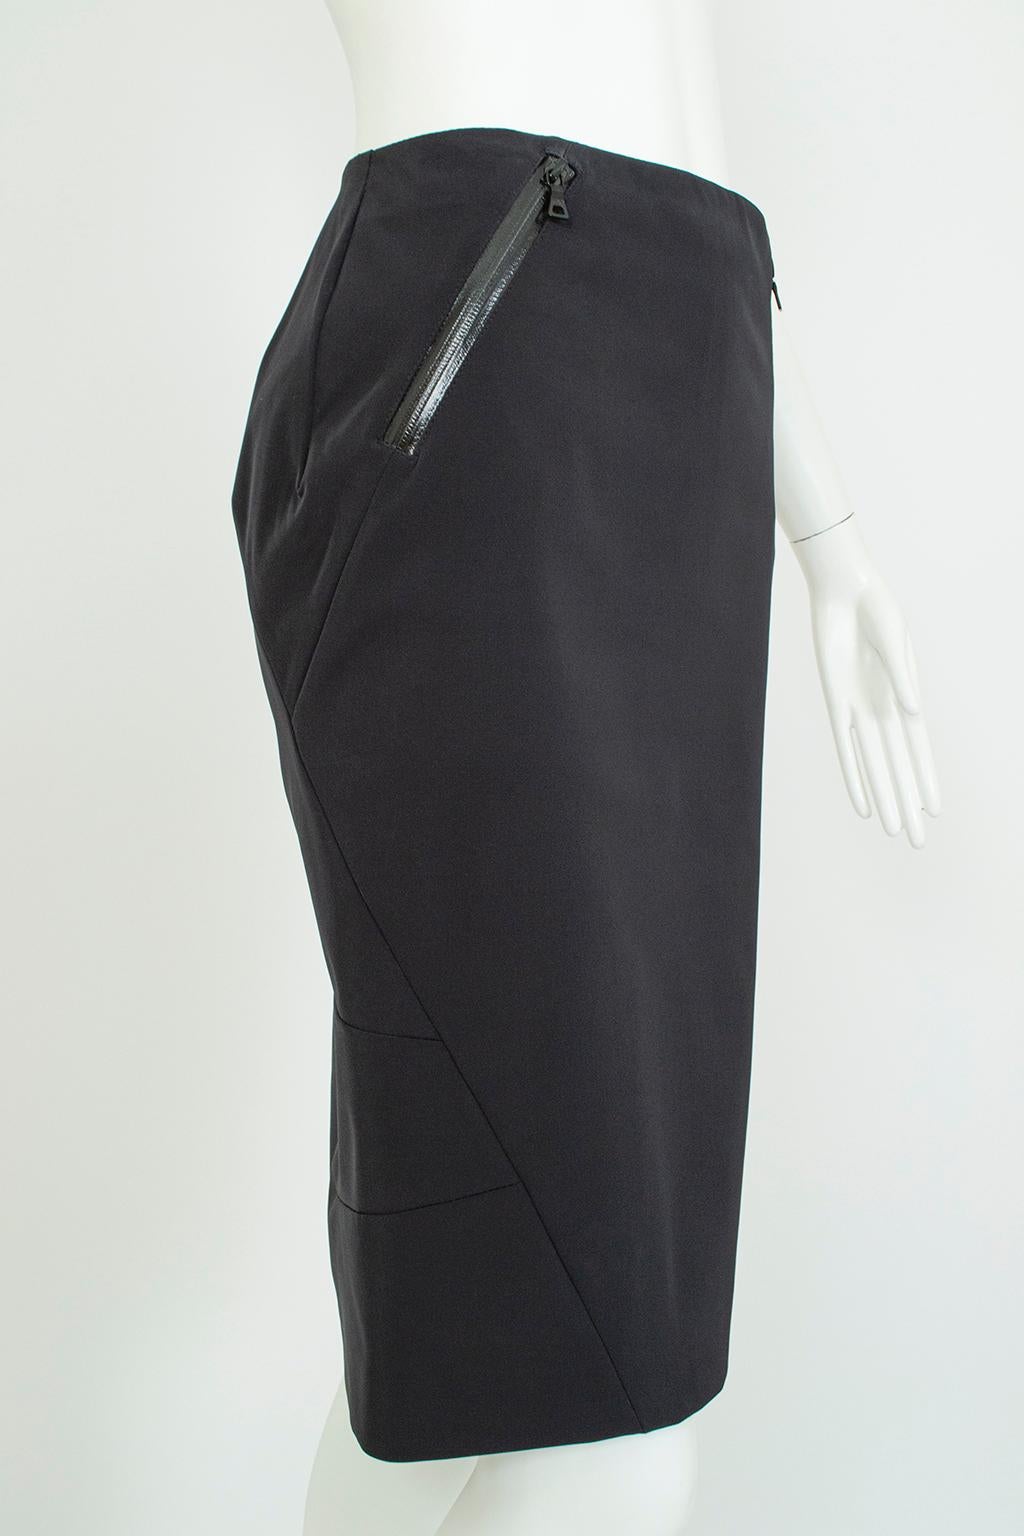 New Prada Black Corset-Seam Pencil Skirt with Vinyl Zippers and Vent - S, 2001 Pour femmes en vente